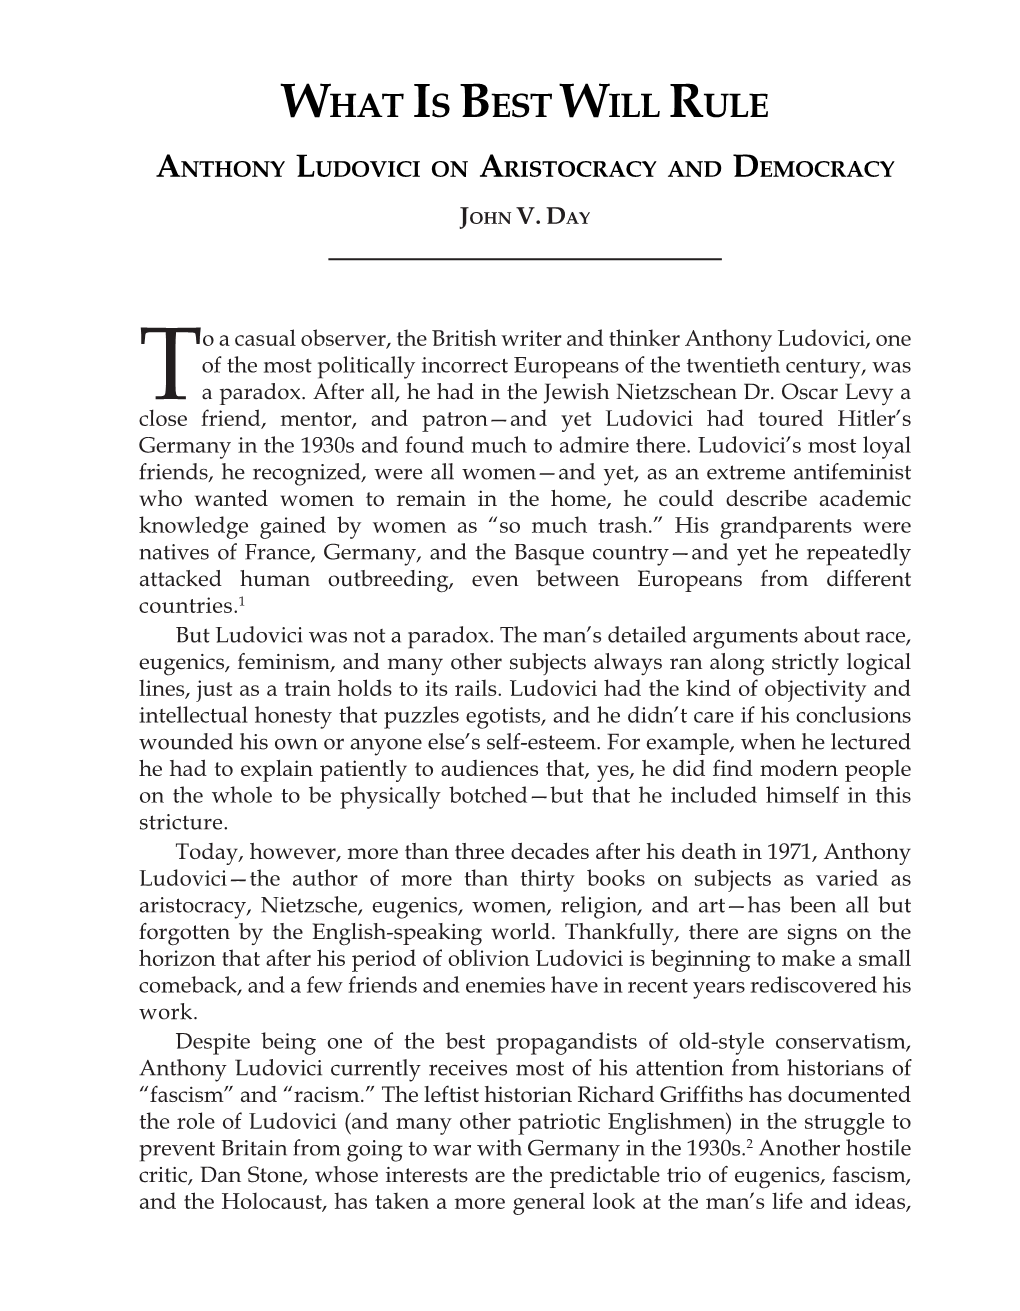 Anthony Ludovici on Aristocracy and Democracy